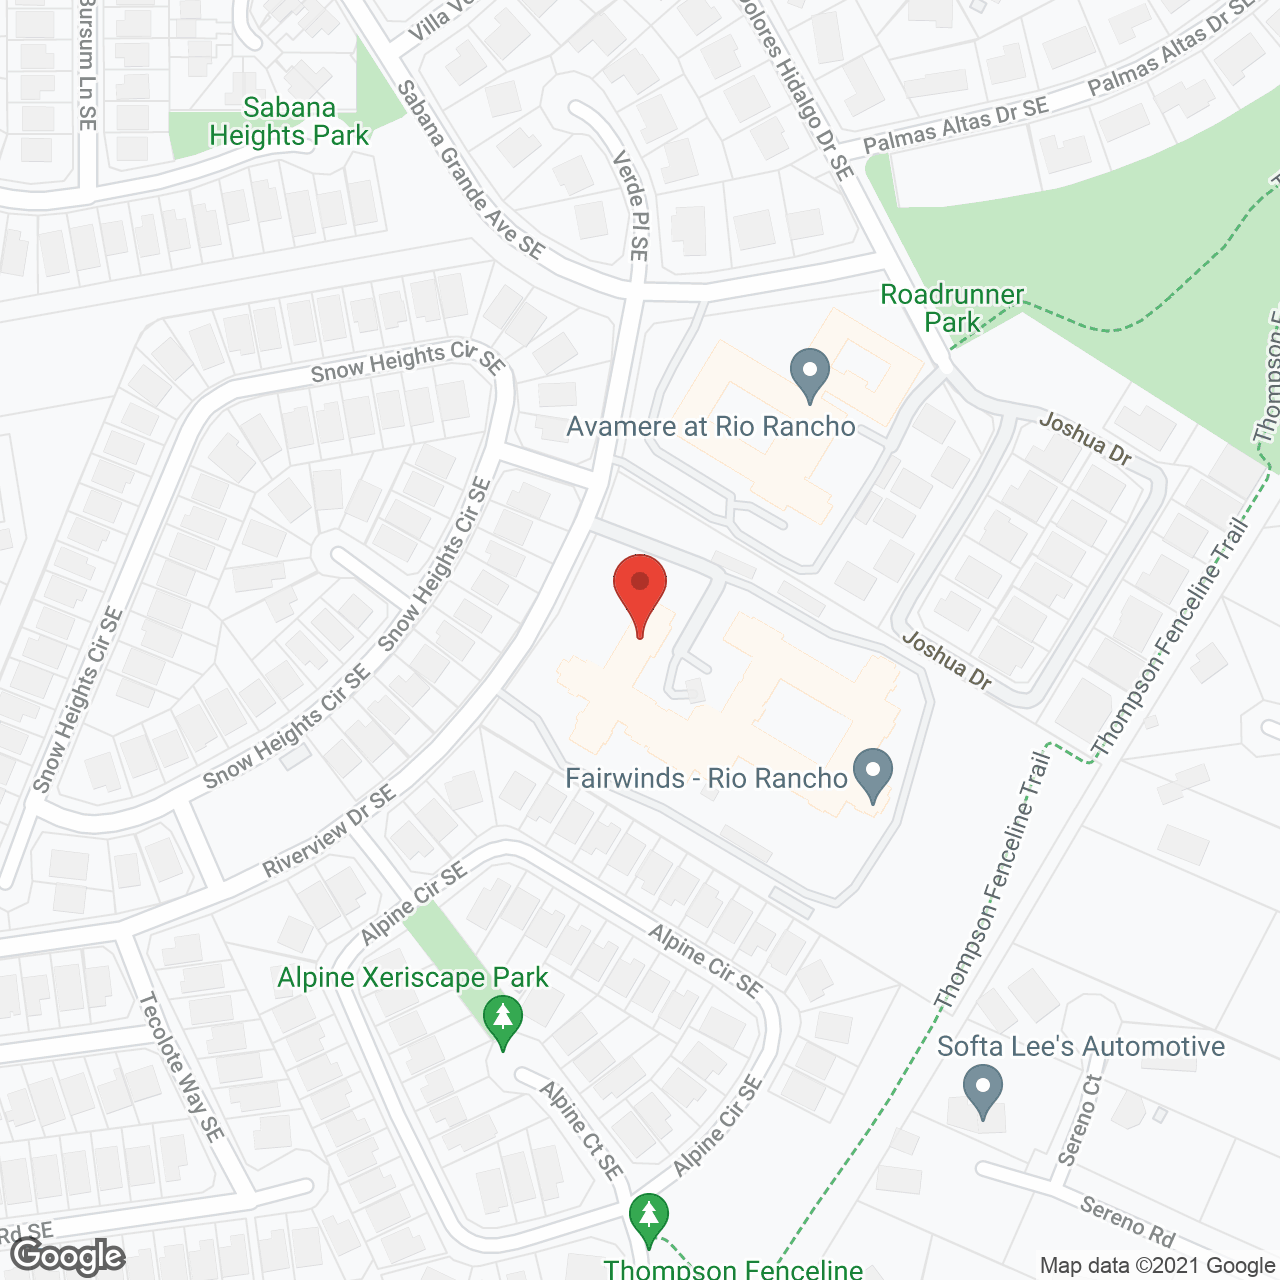 Fairwinds - Rio Rancho in google map